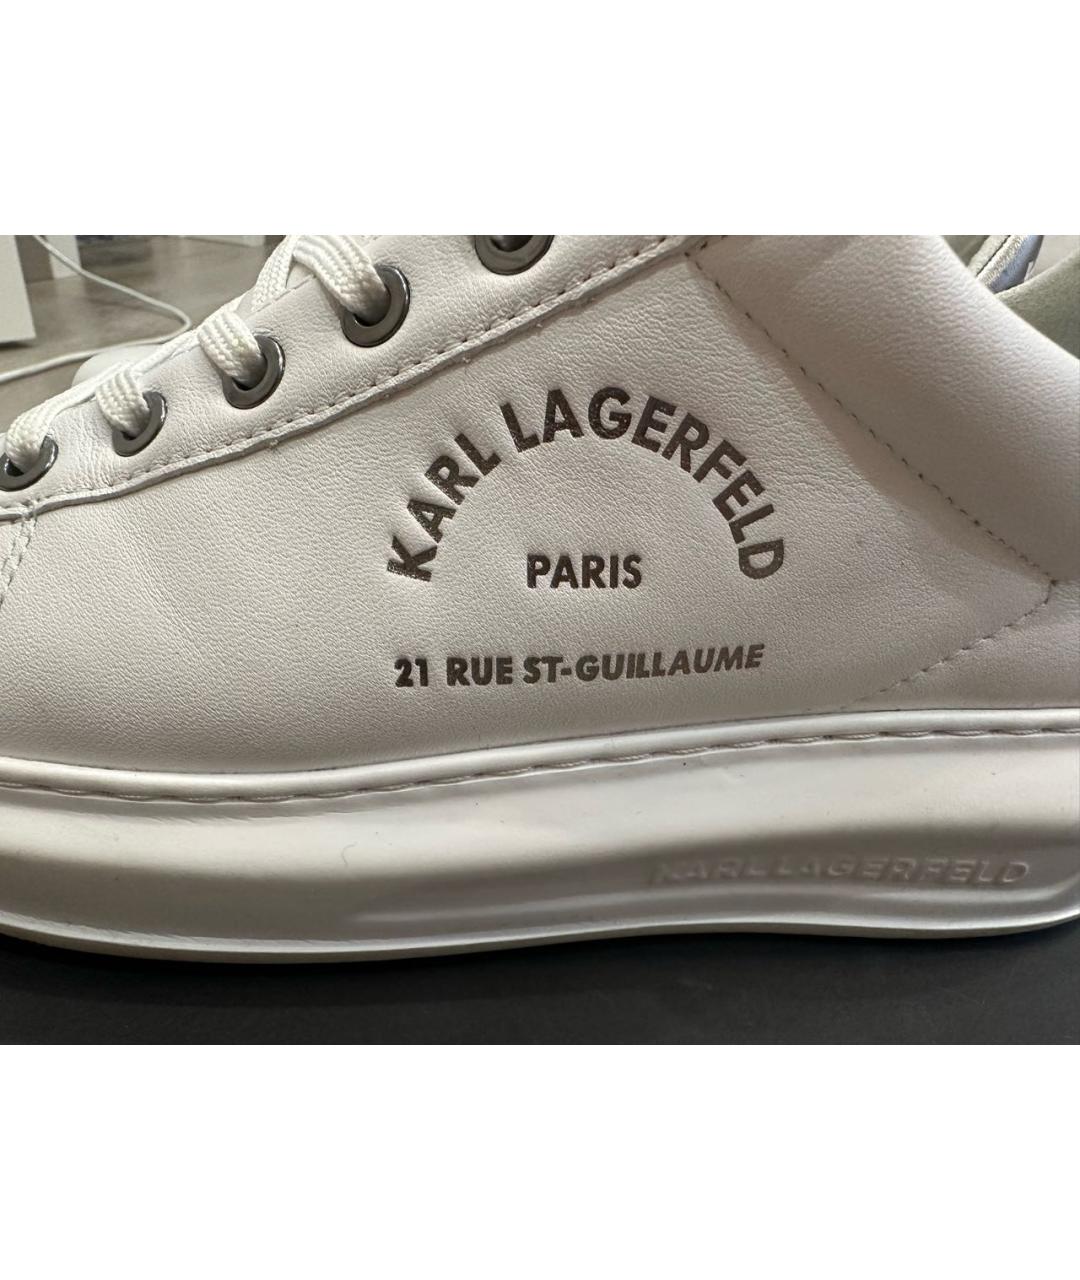 KARL LAGERFELD Белые кожаные кроссовки, фото 5